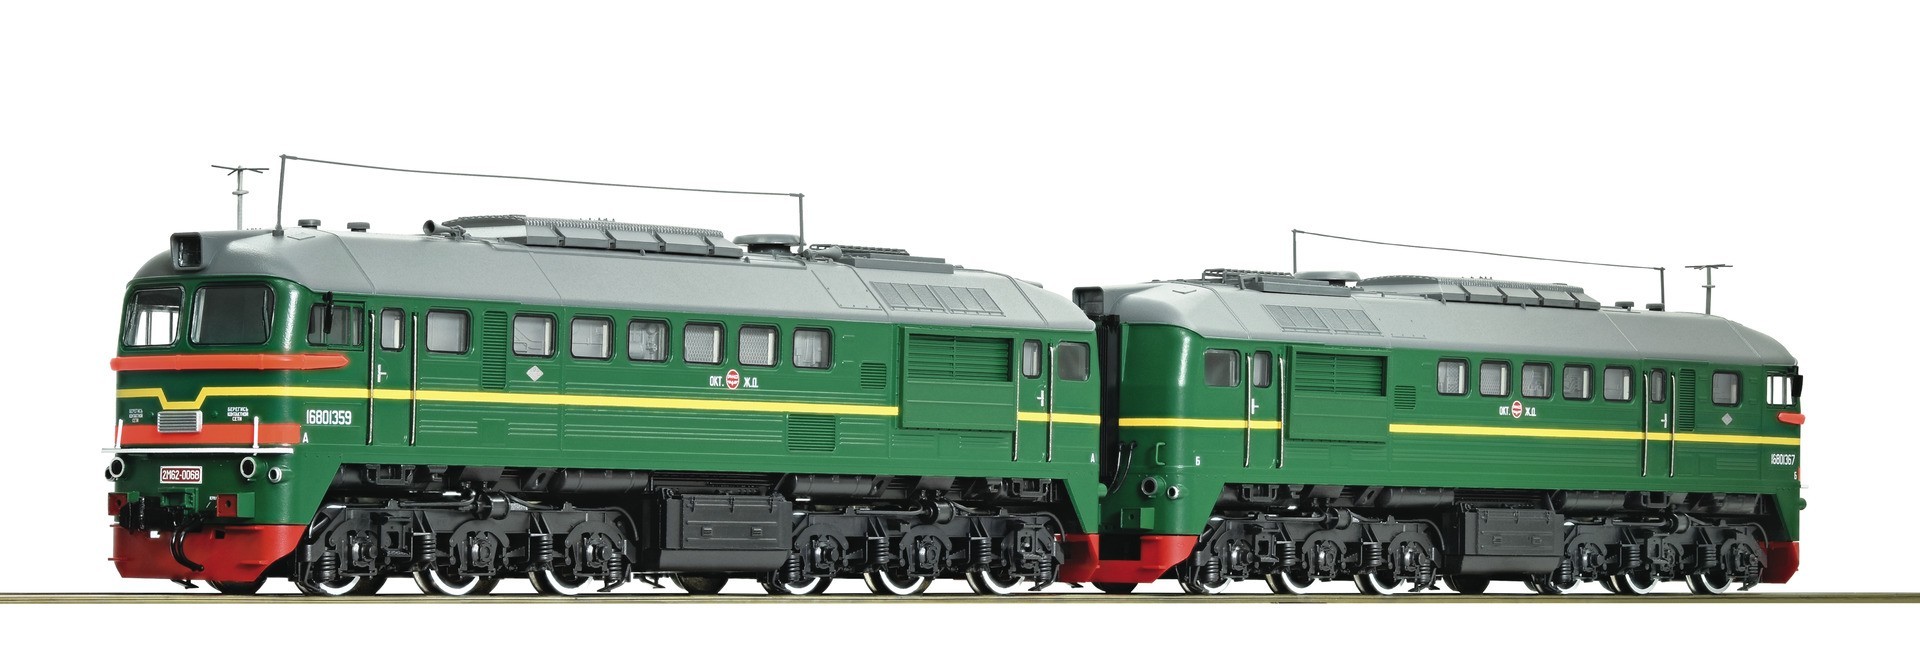 Trains miniatures : locomotives et autorail - Diesel locomotive 2M62, 